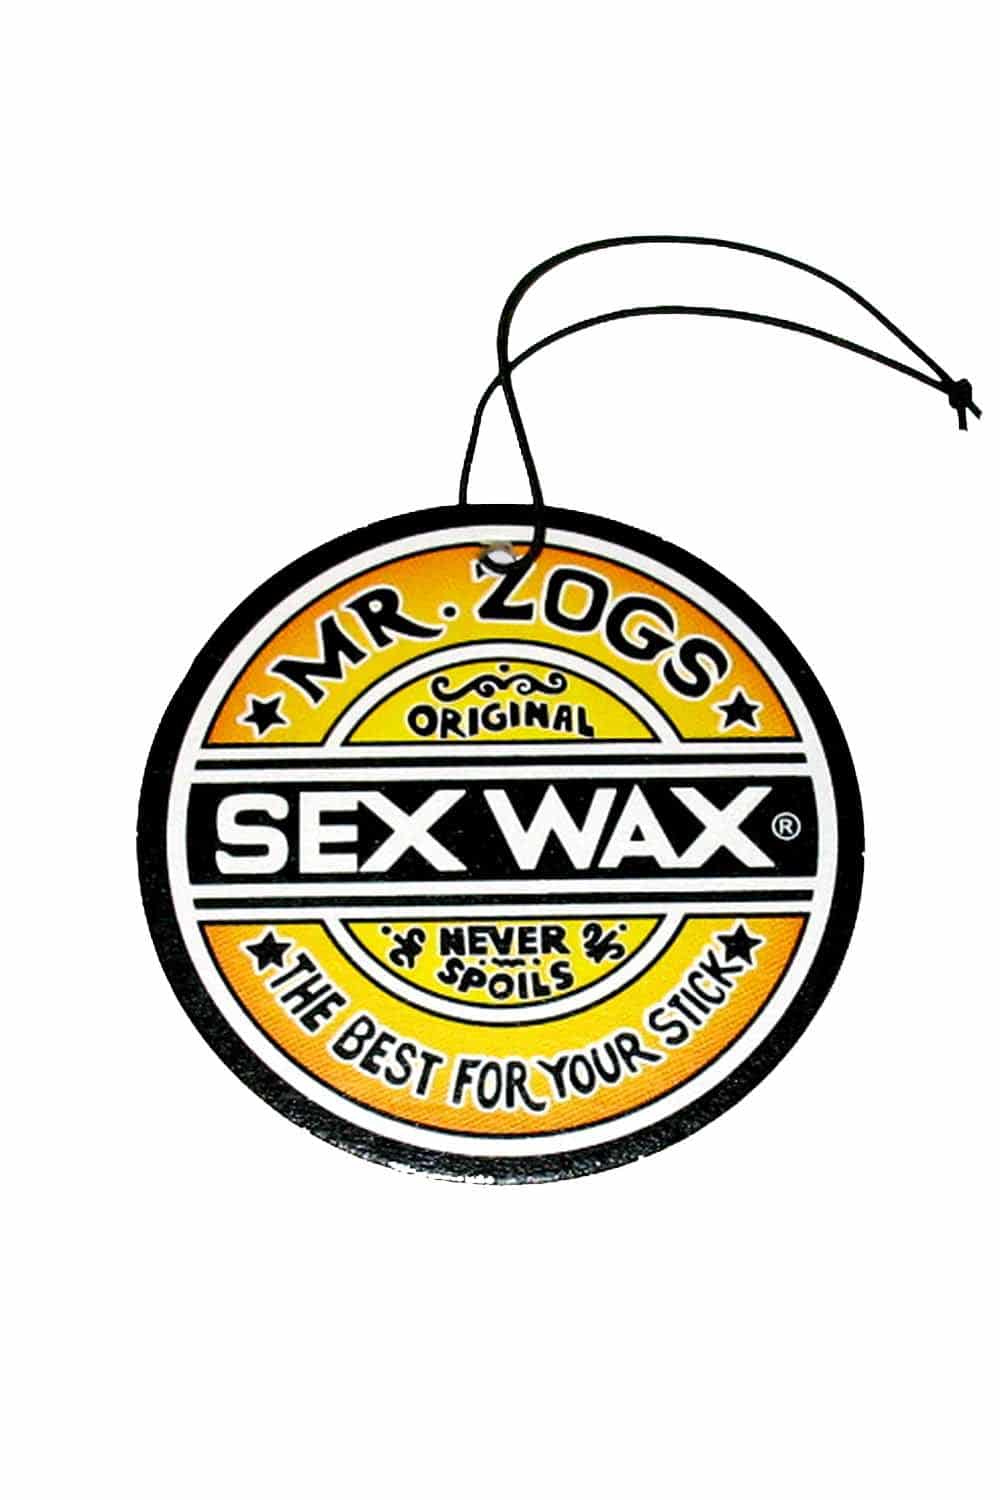  Sex Wax Air Freshener (3-Pack, Strawberry) : Automotive